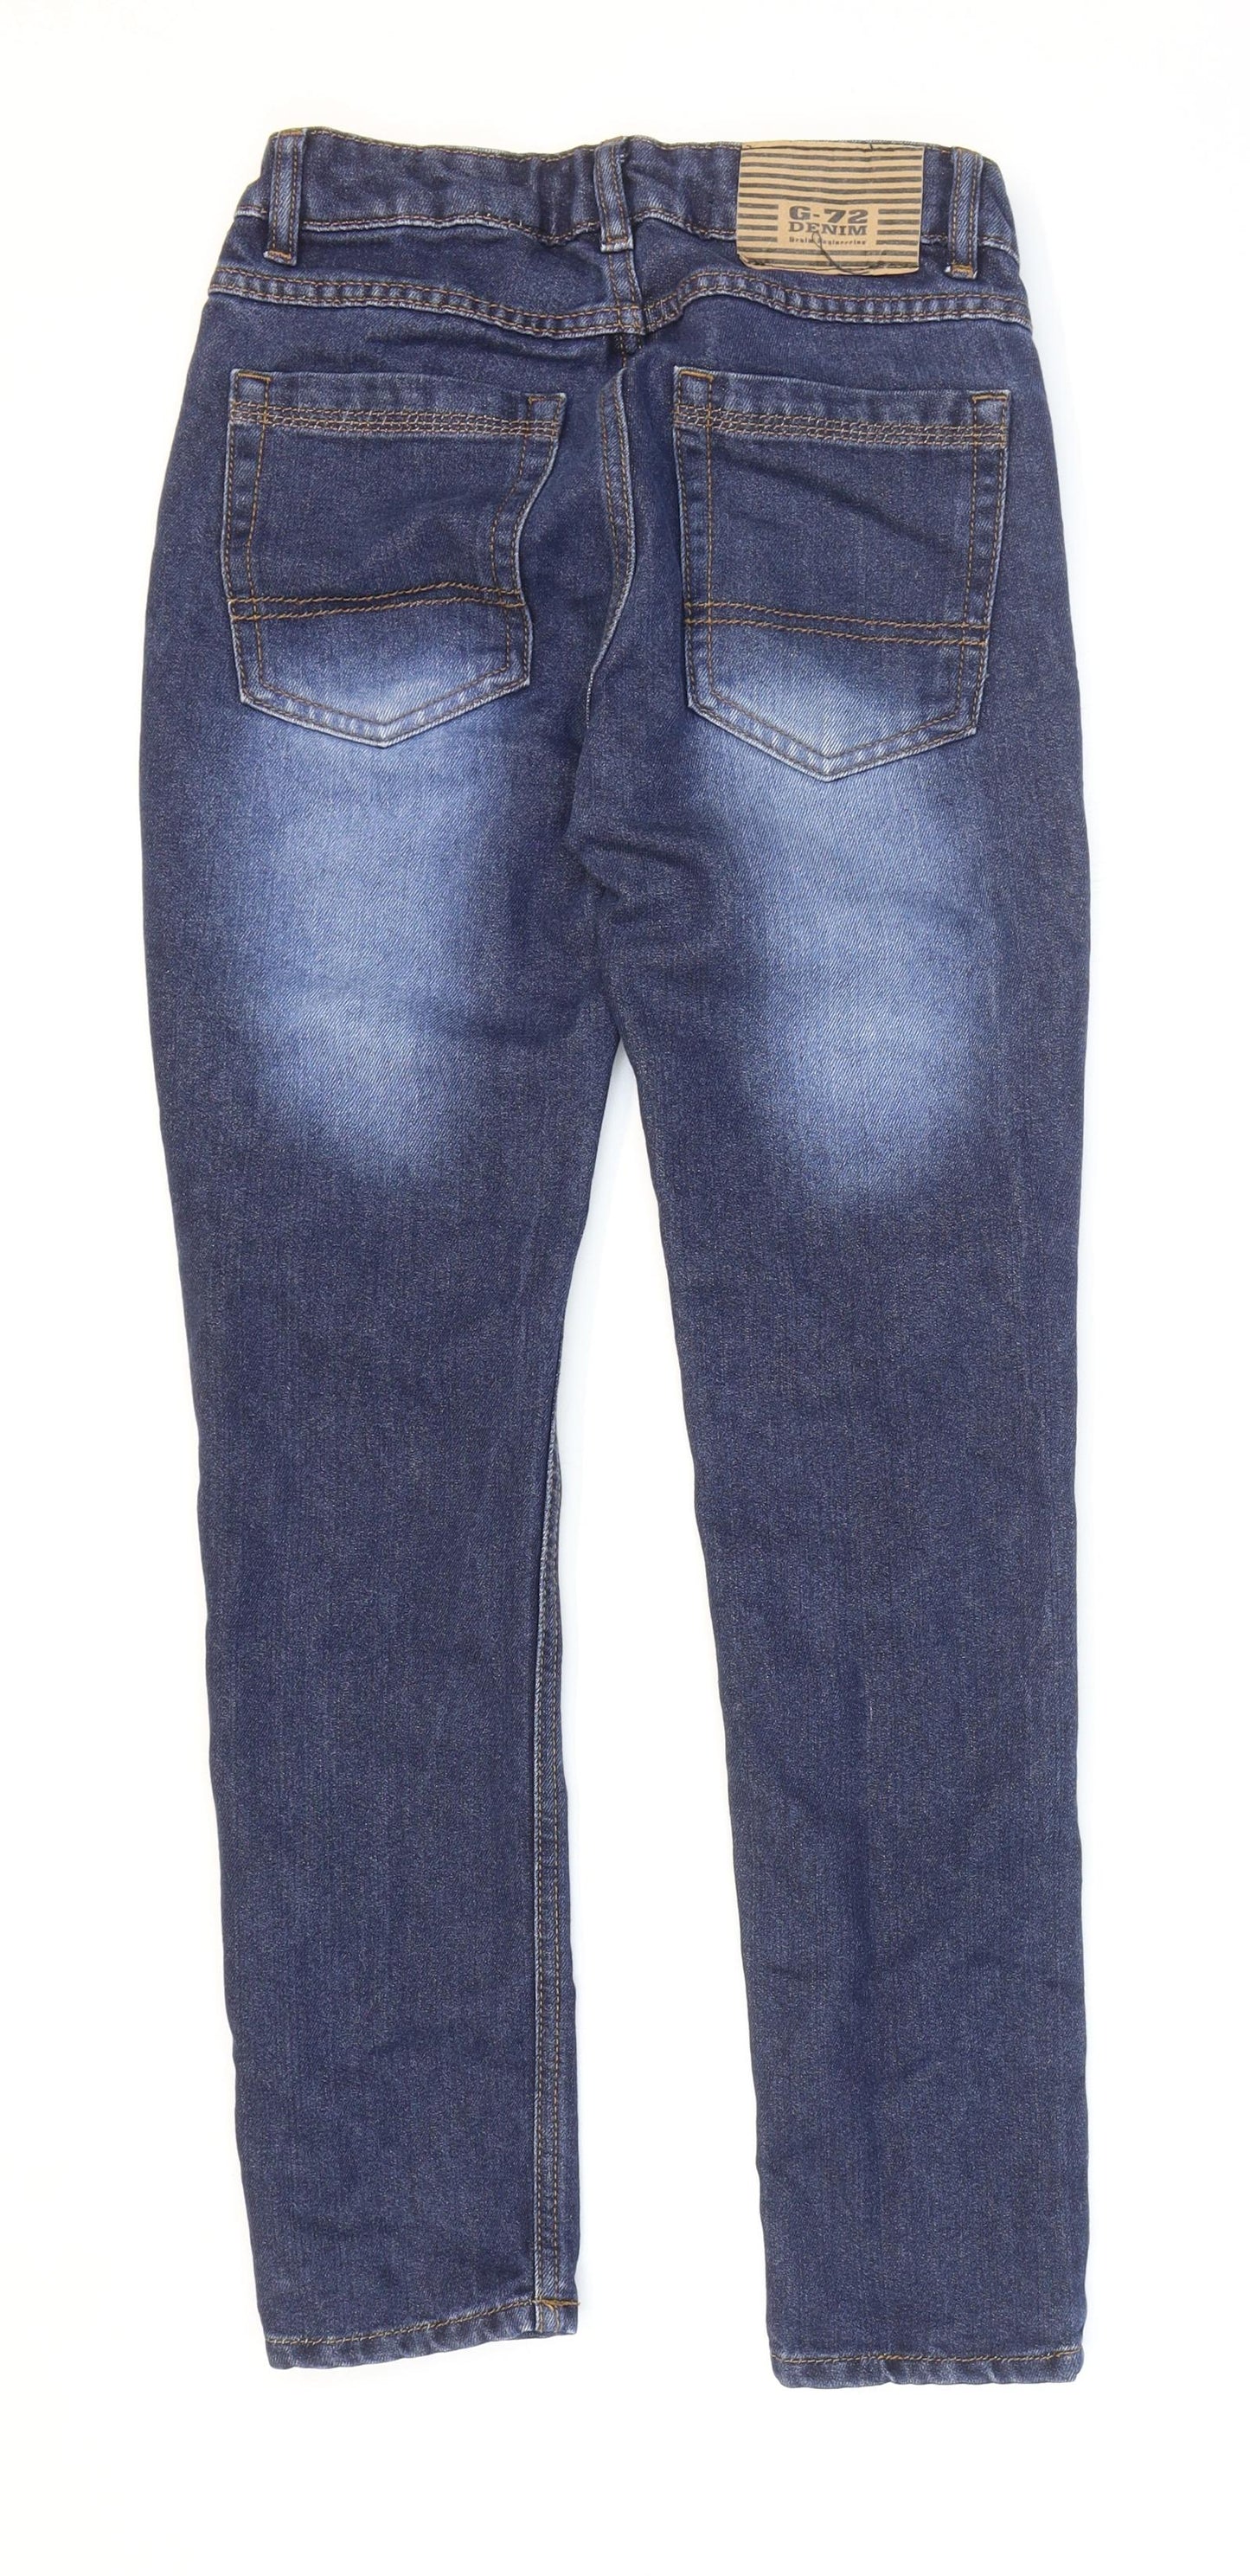 G-72 Denim Girls Blue Cotton Skinny Jeans Size 12-13 Years Regular Zip - Washed look